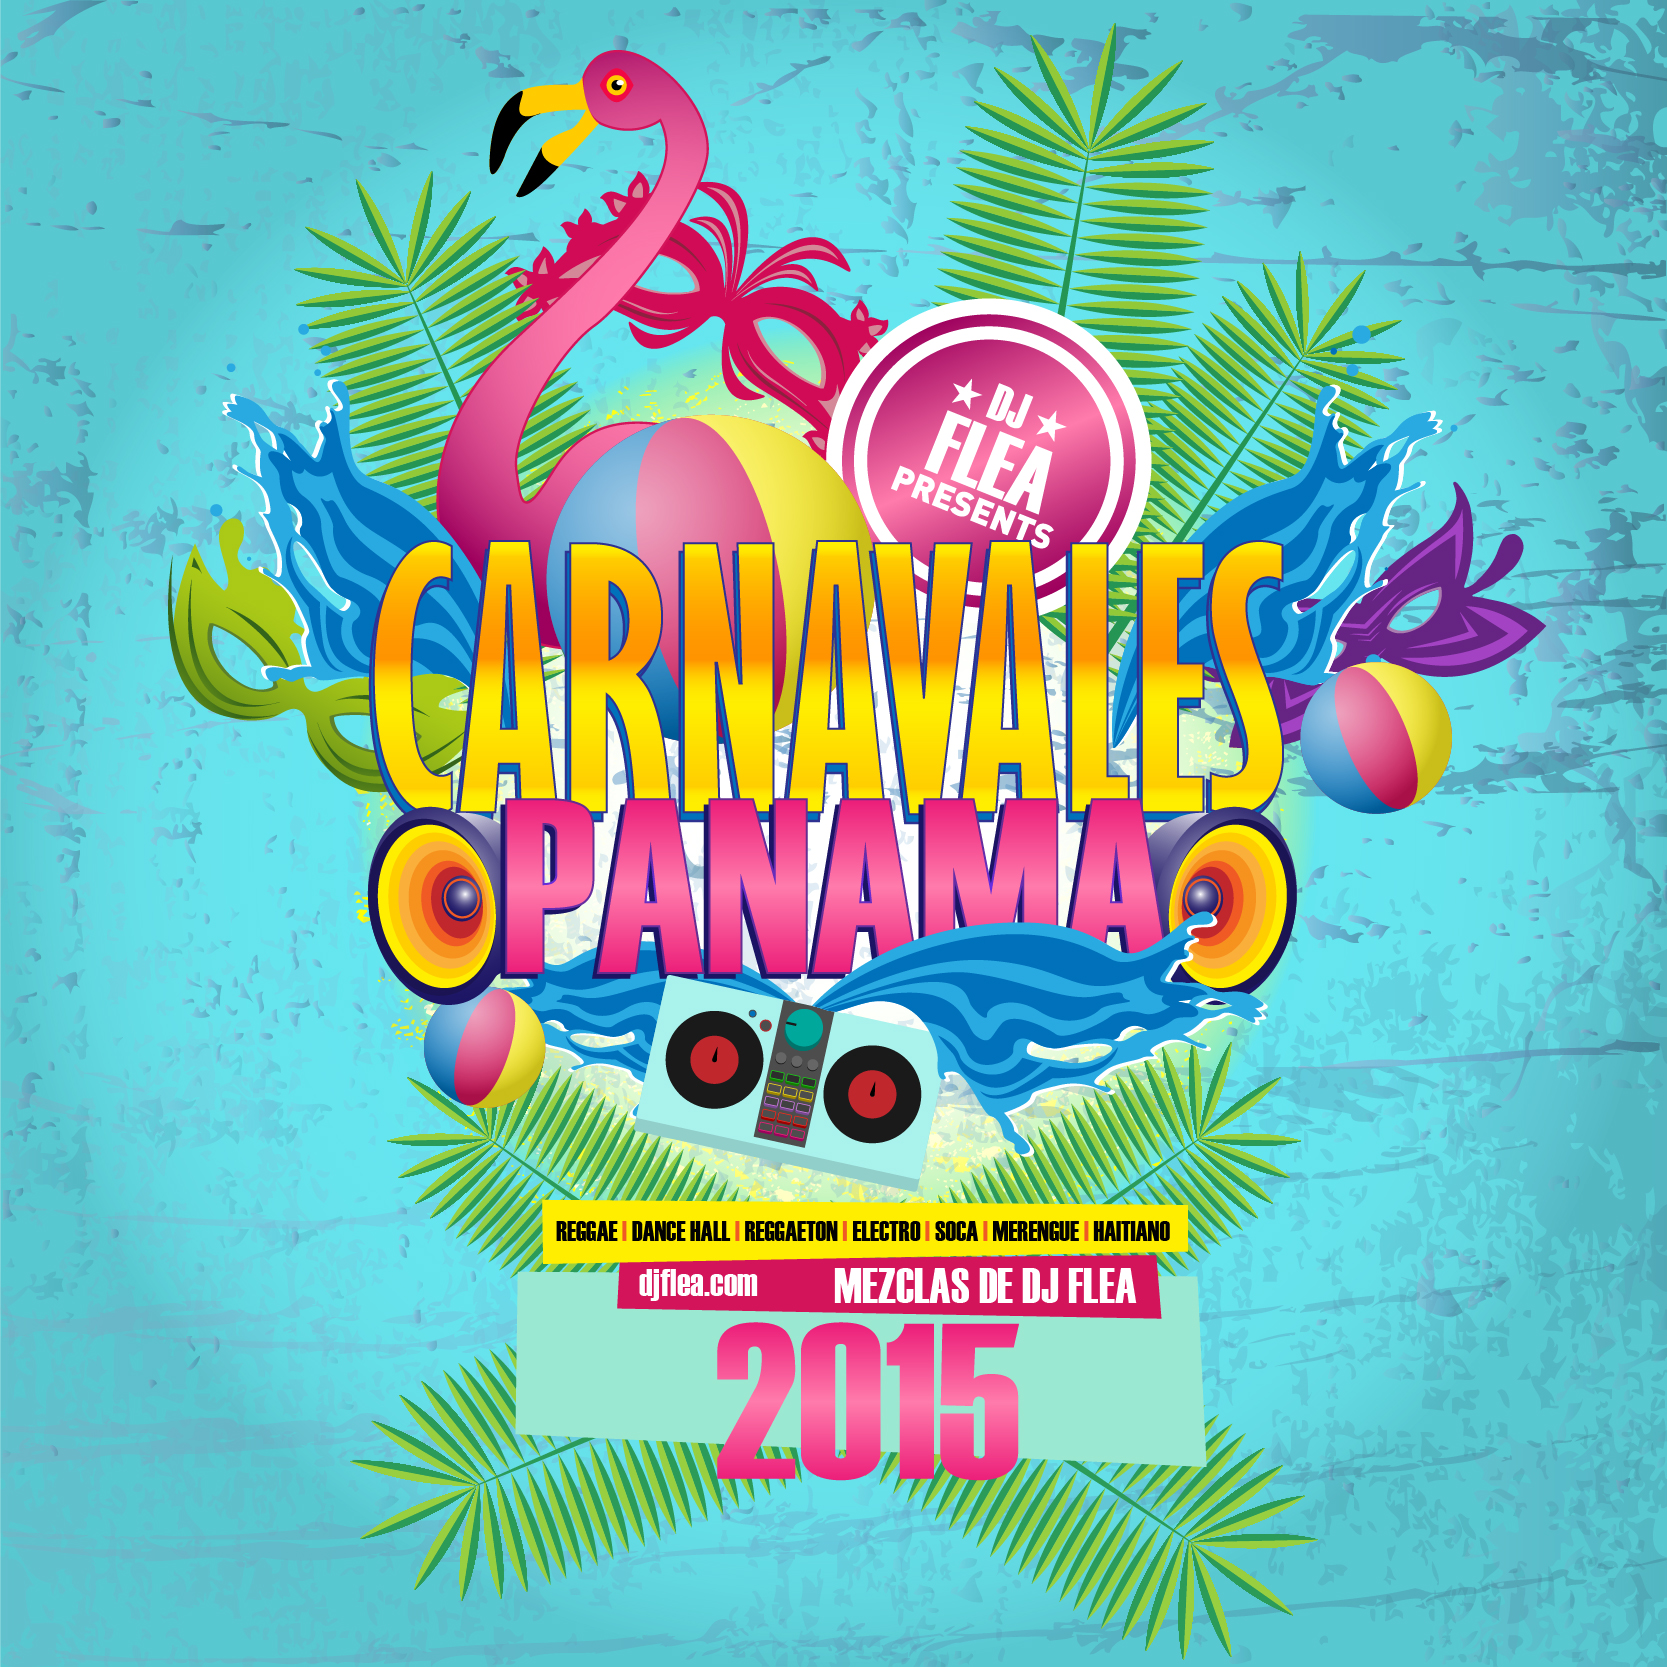 Carnavales Panama 2015